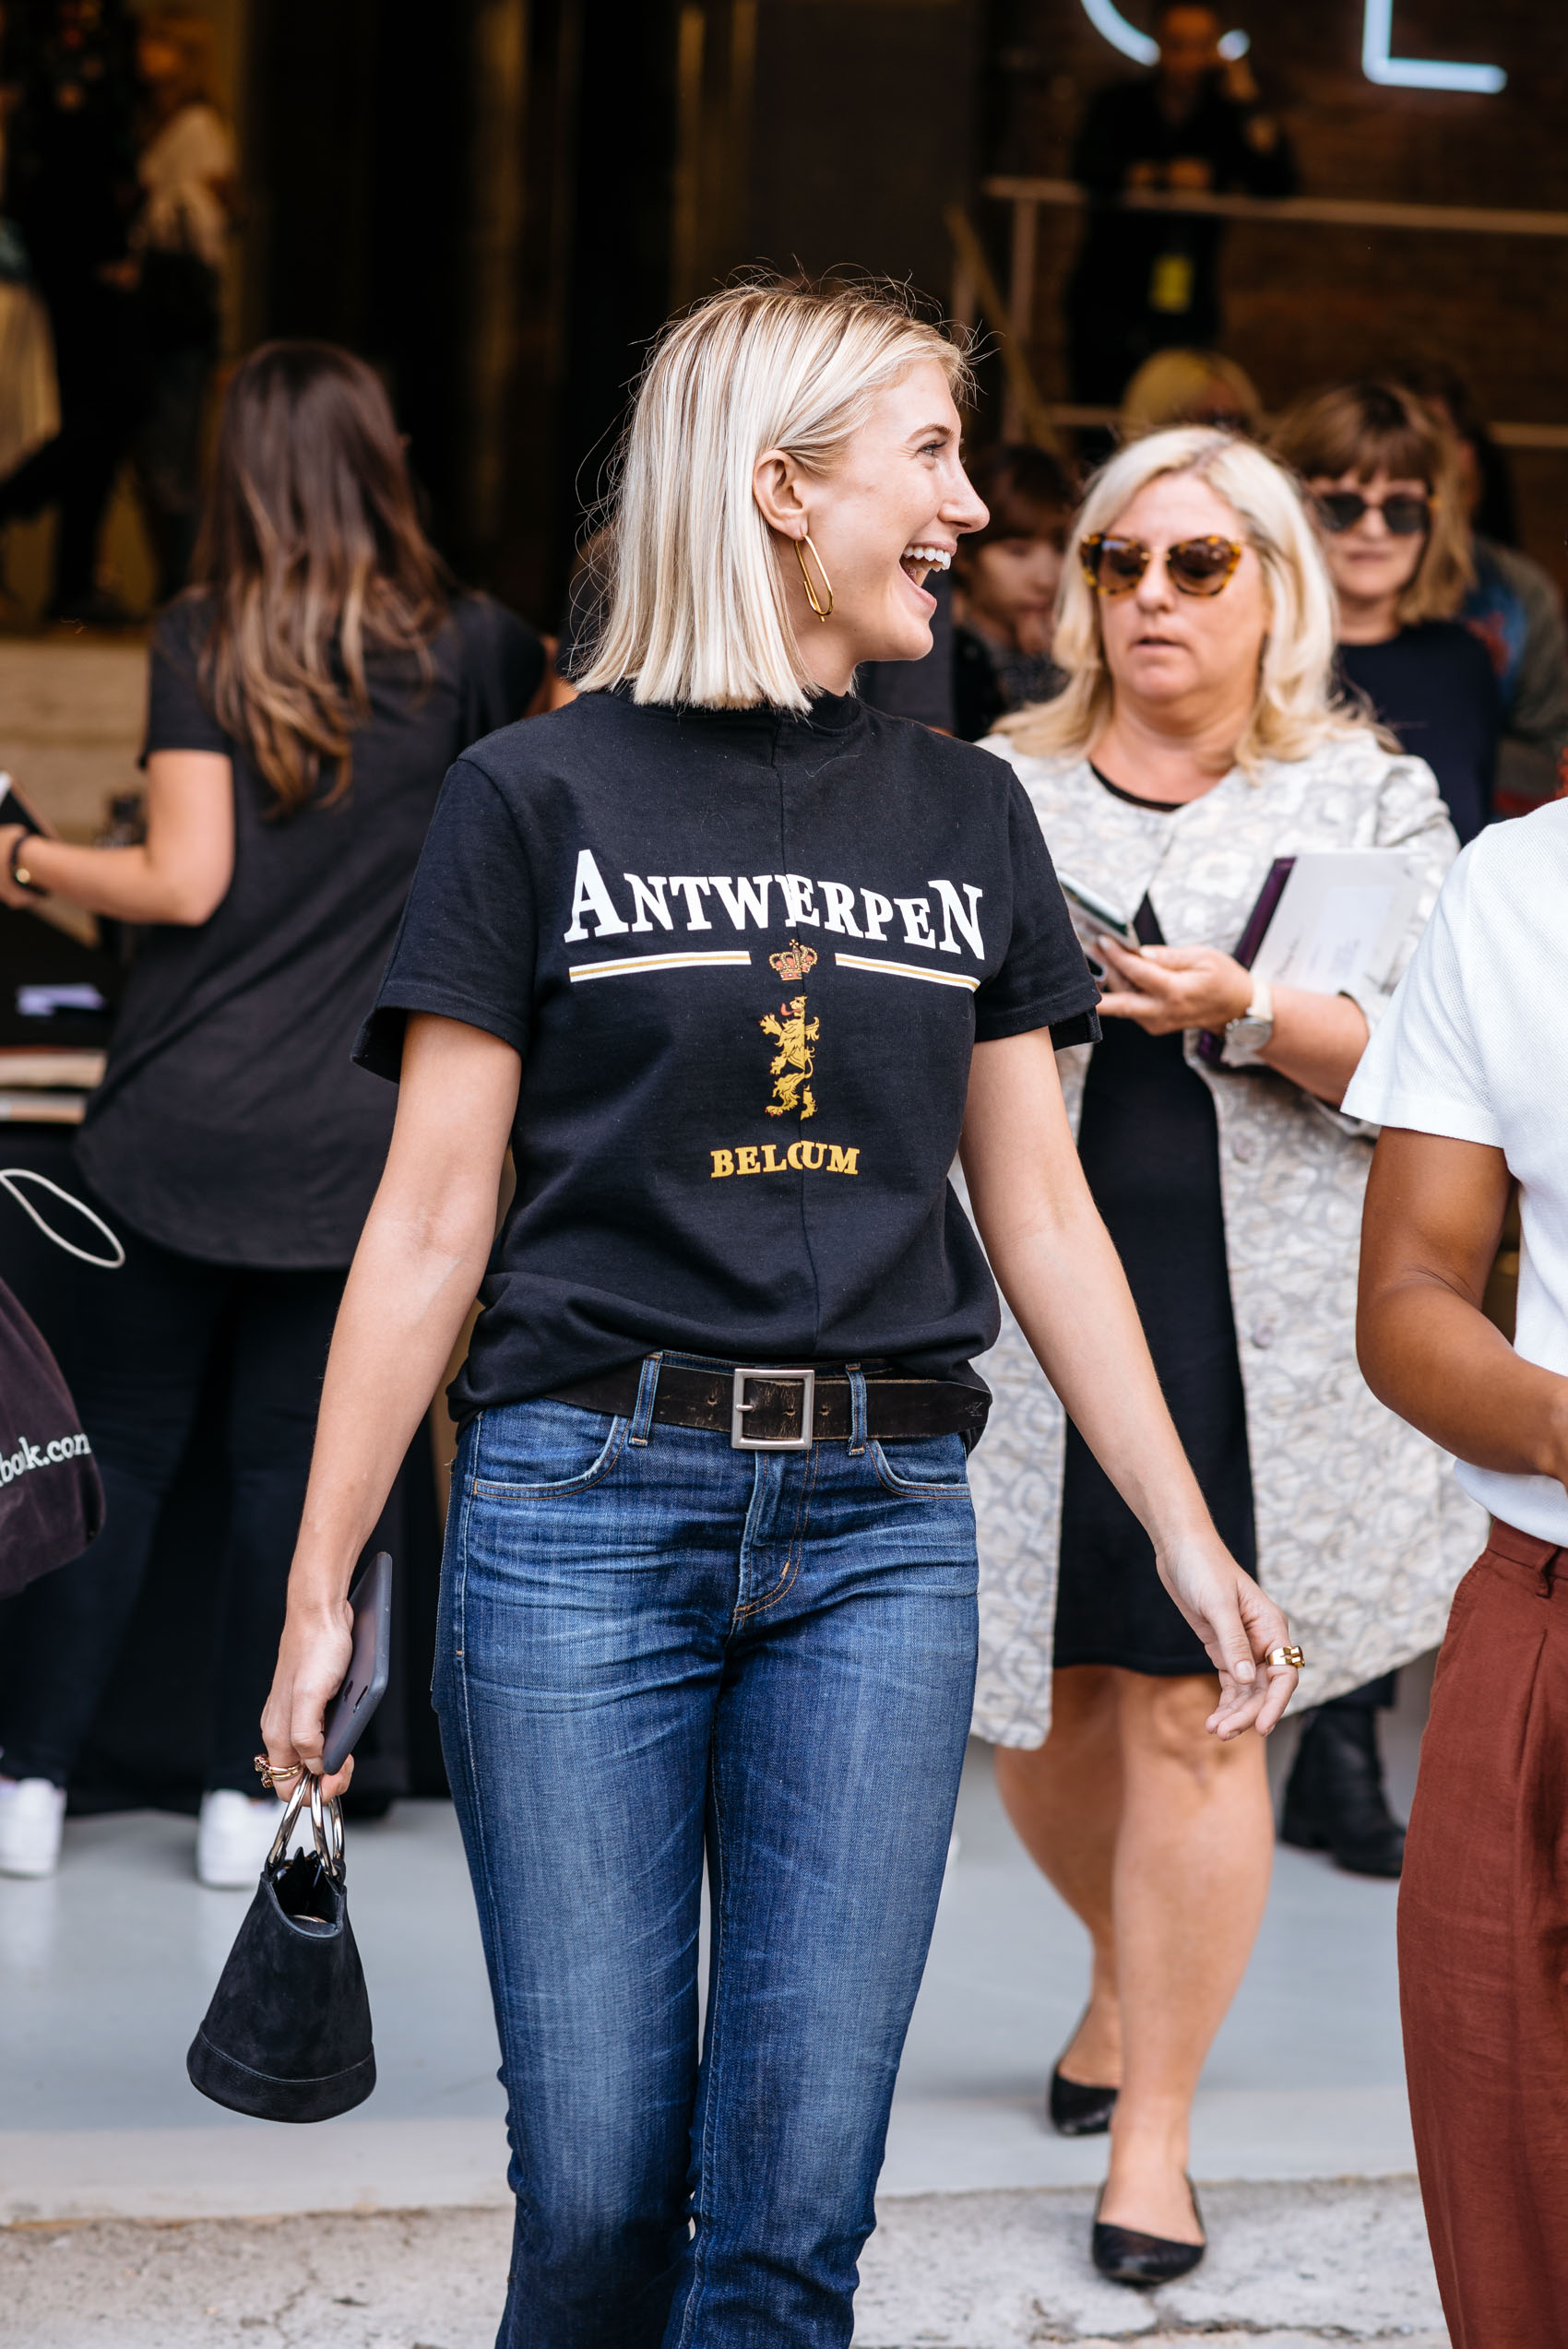 Vetements Antwerpen T-shirt Street Style at NYFW SS17